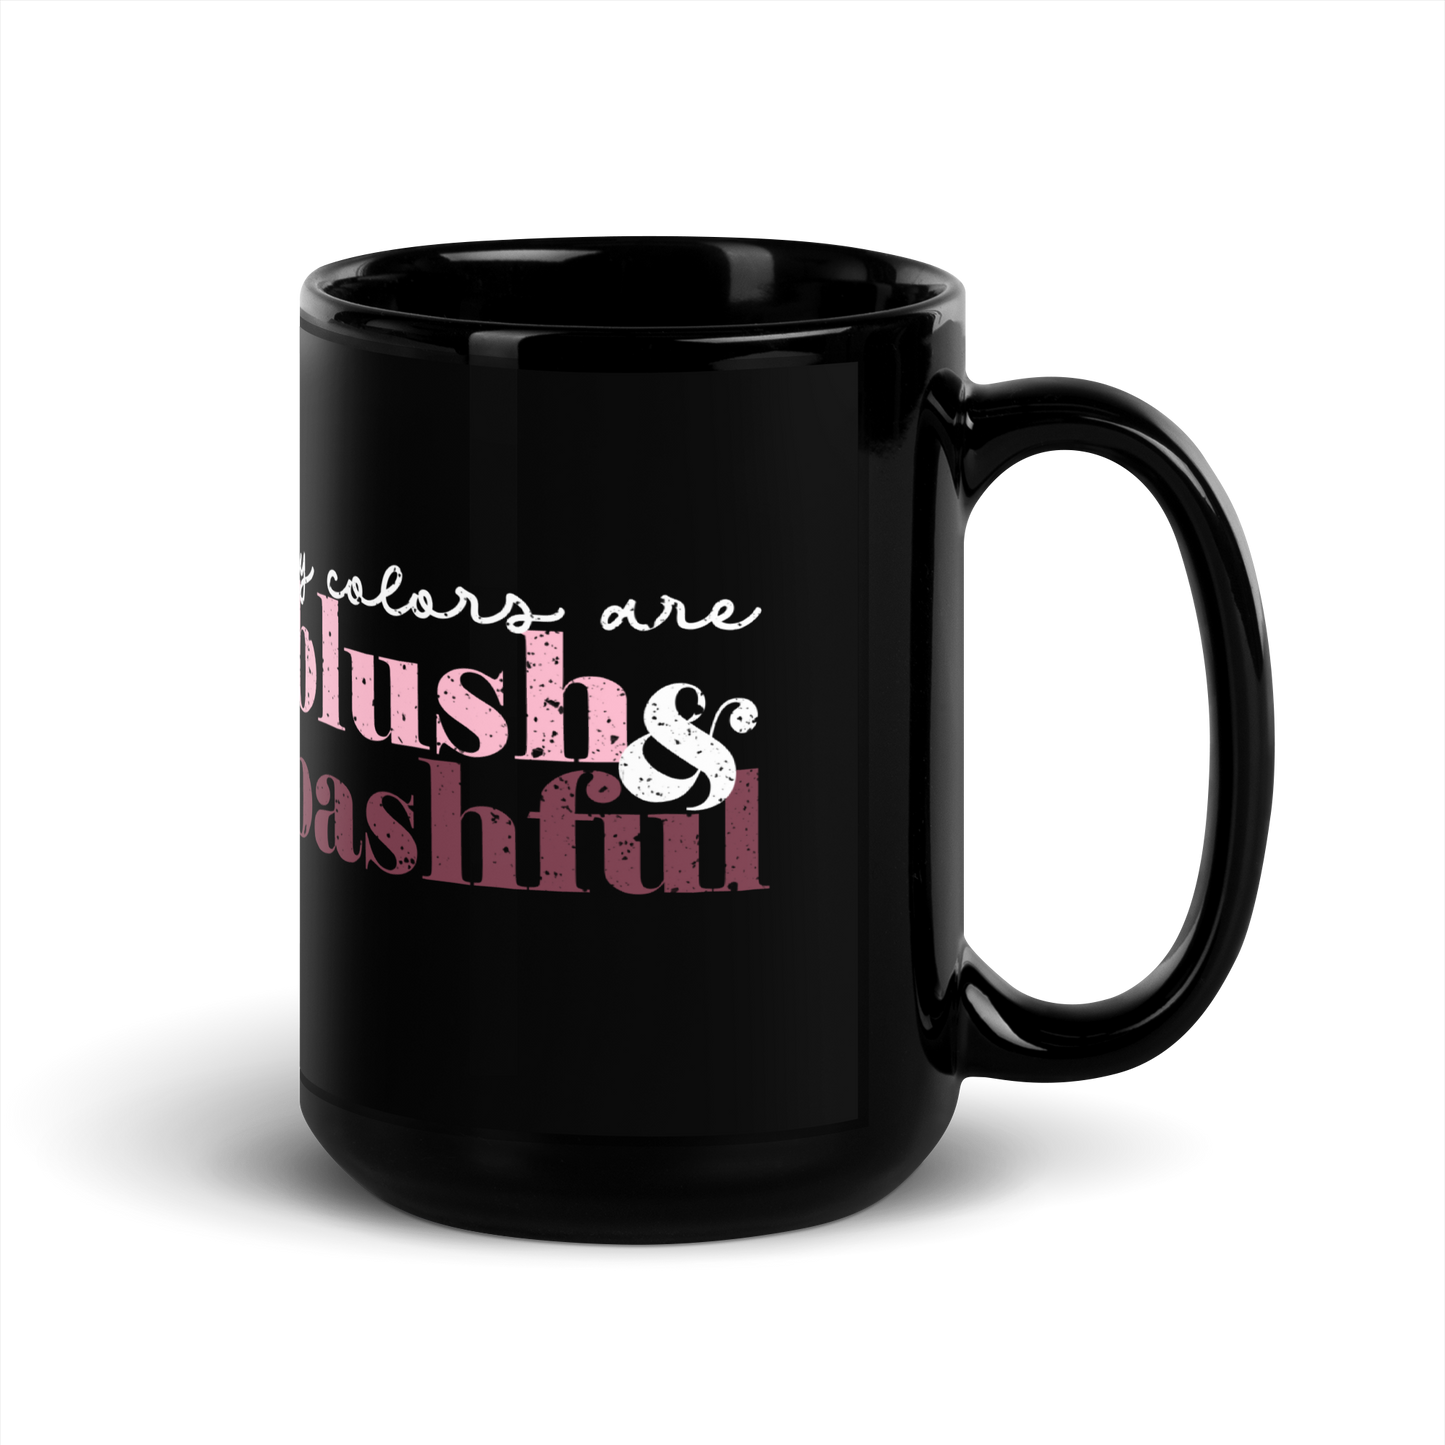 Blush and Bashful Mug